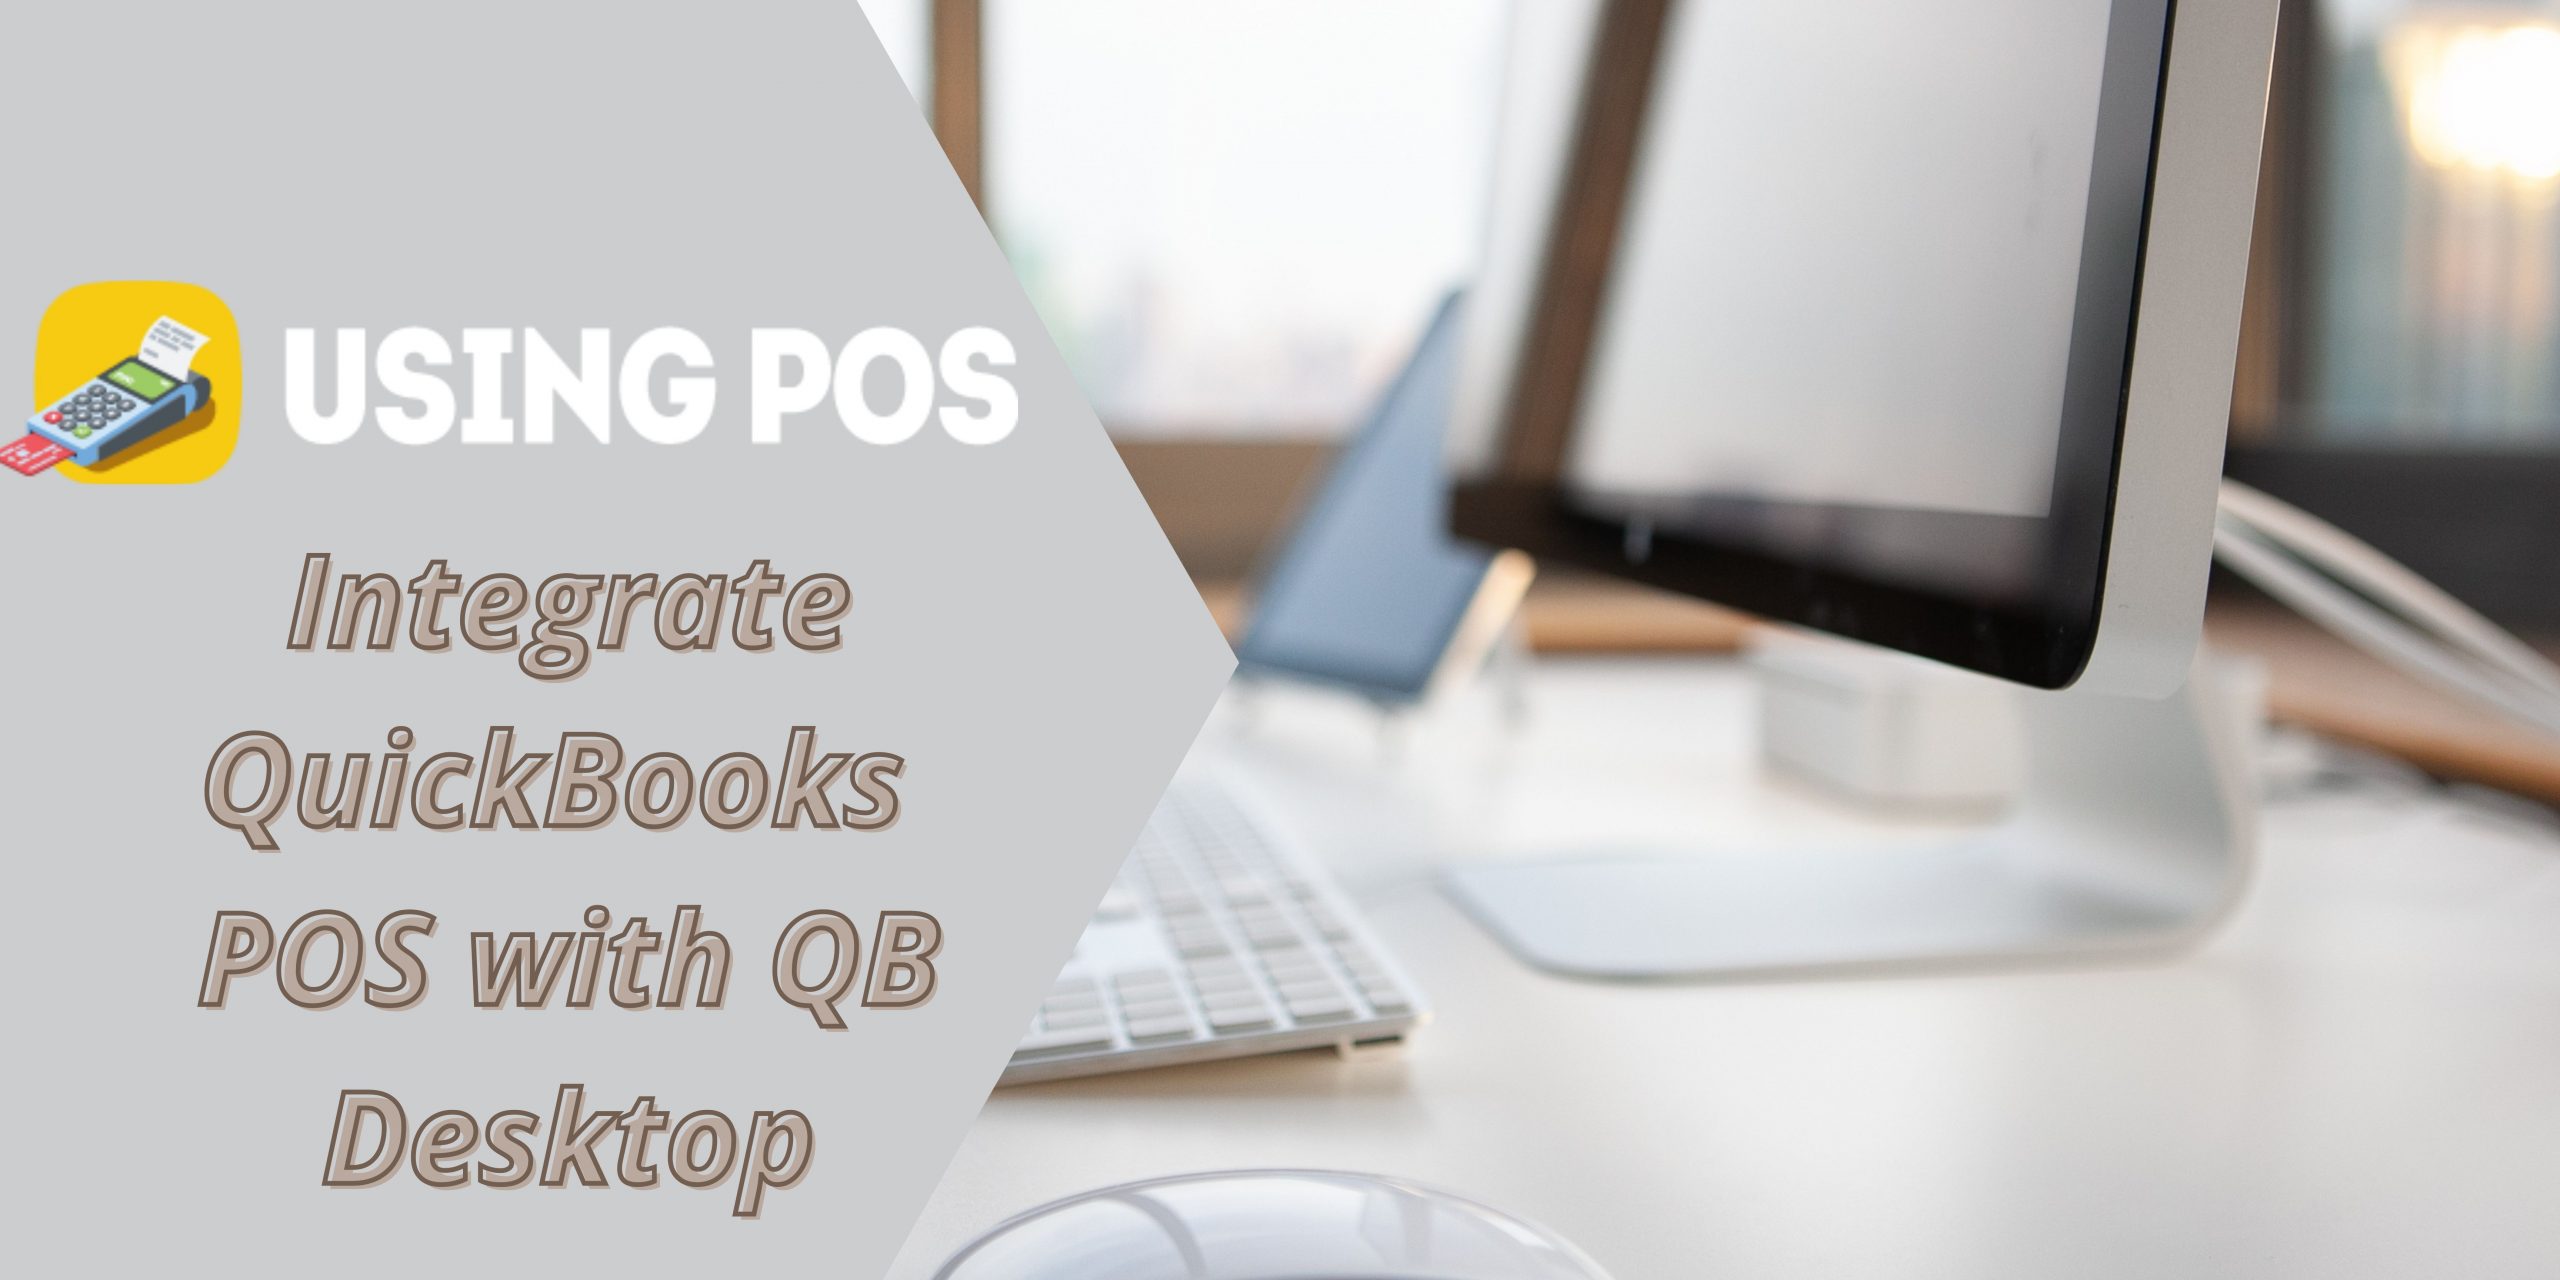 Integrate QuickBooks POS with QB Desktop